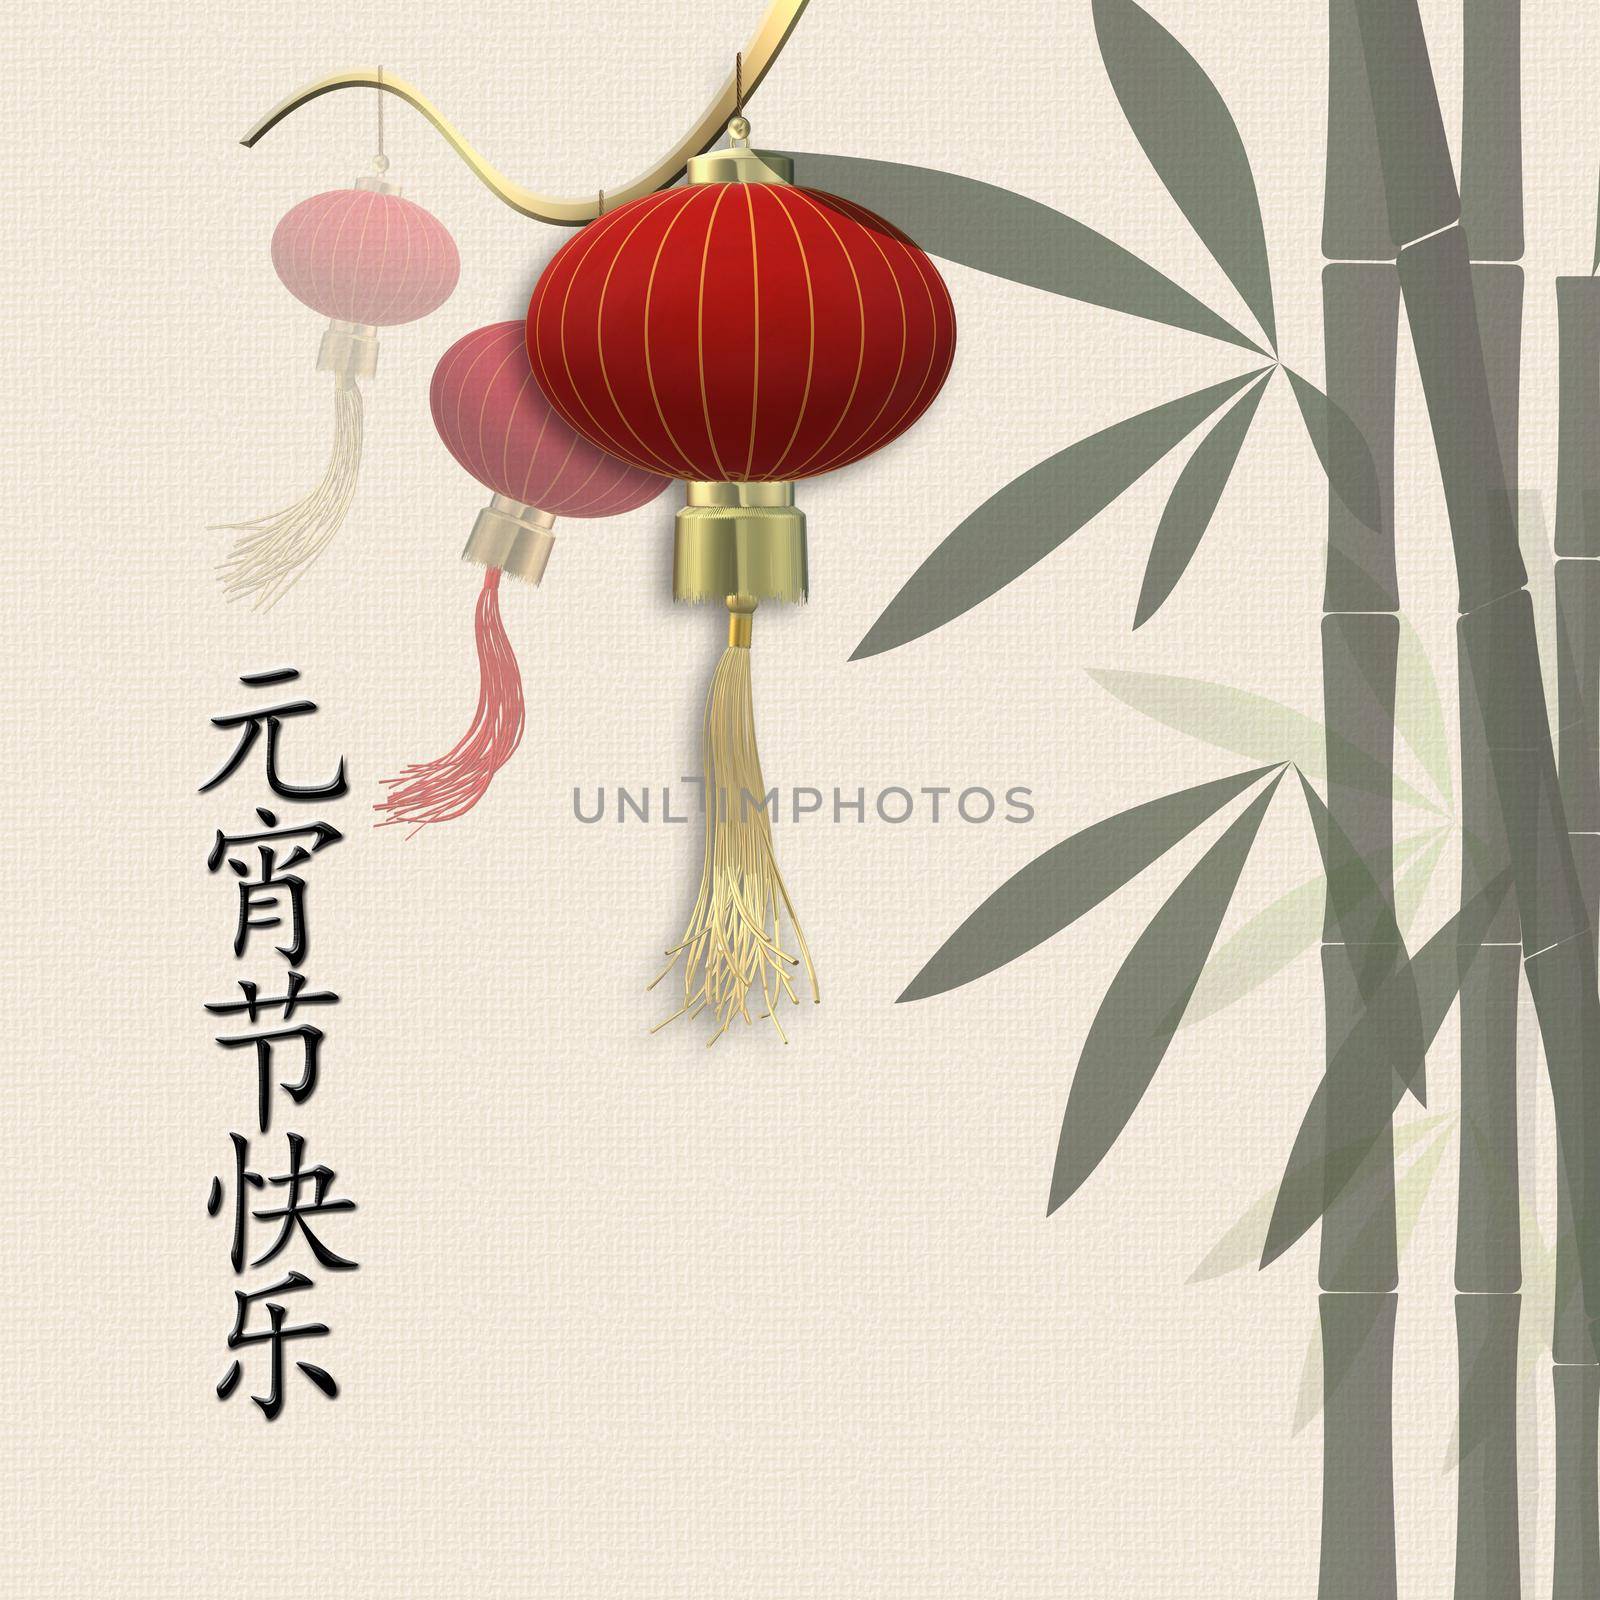 Lantern festival, mid autumn lantern celebration. Traditional Chinese lanterns, bamboo on pastel yellow background. Chinese New Year. Text Chinese translation Happy Lantern festival, 3D rendering